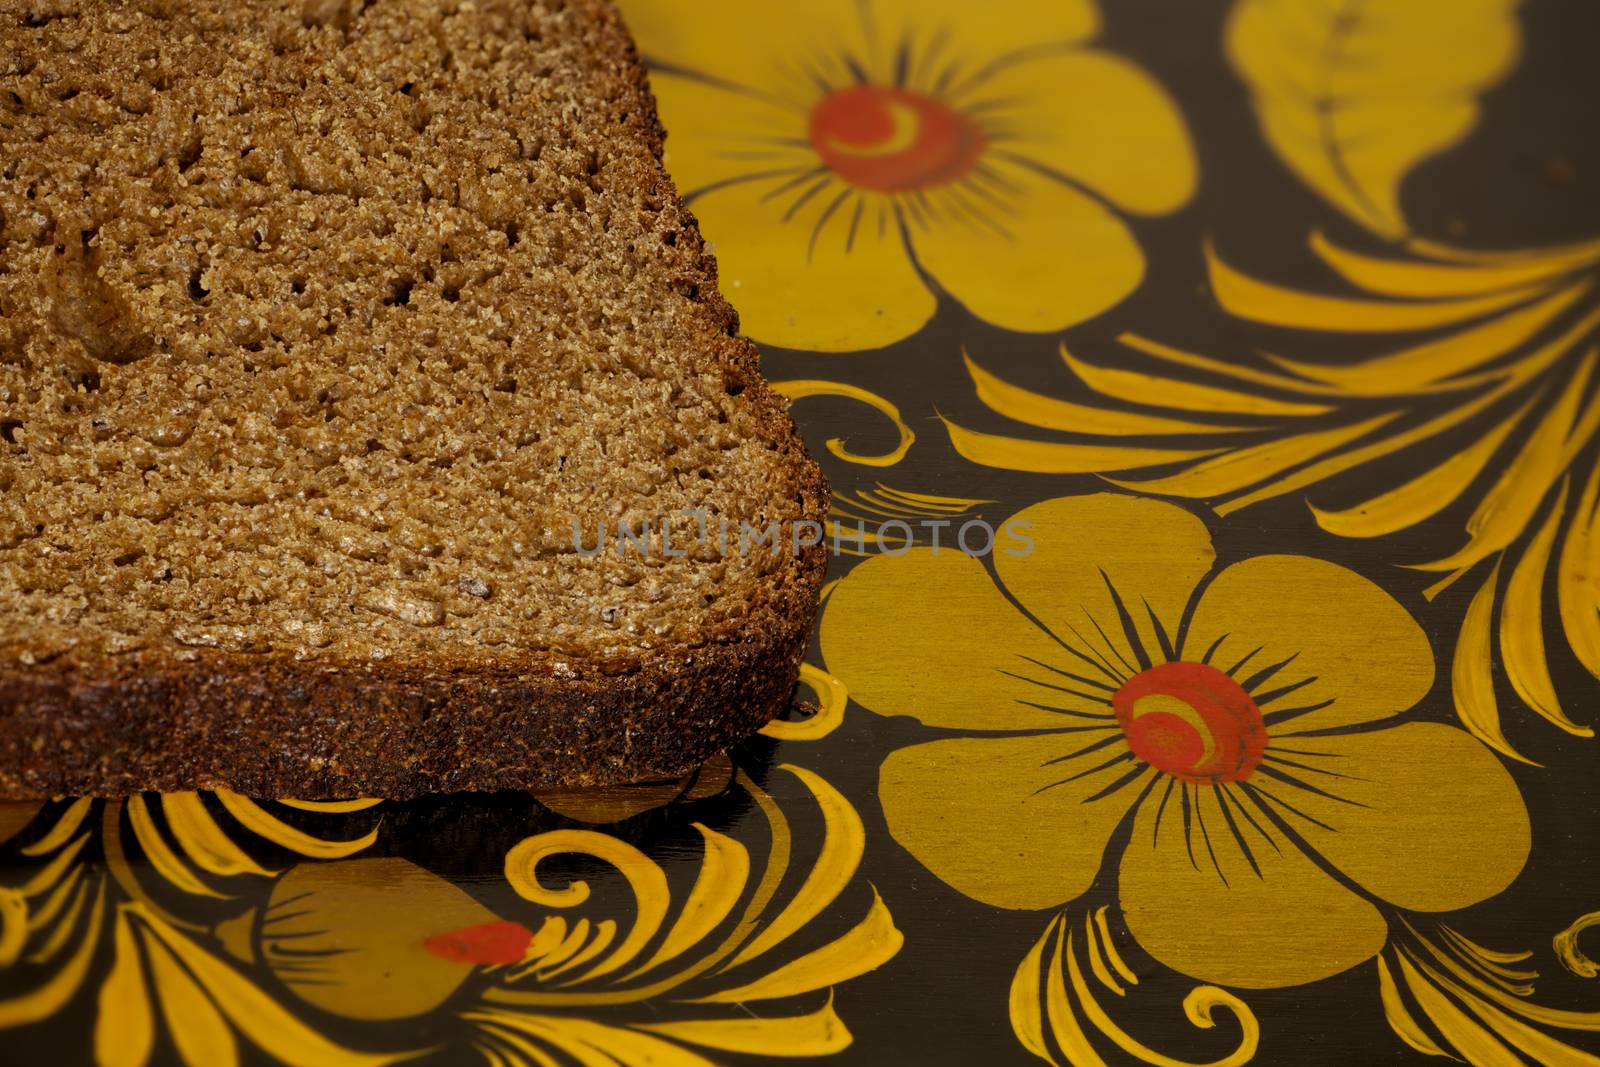 piece of rye bread on a cutting board, macro shot